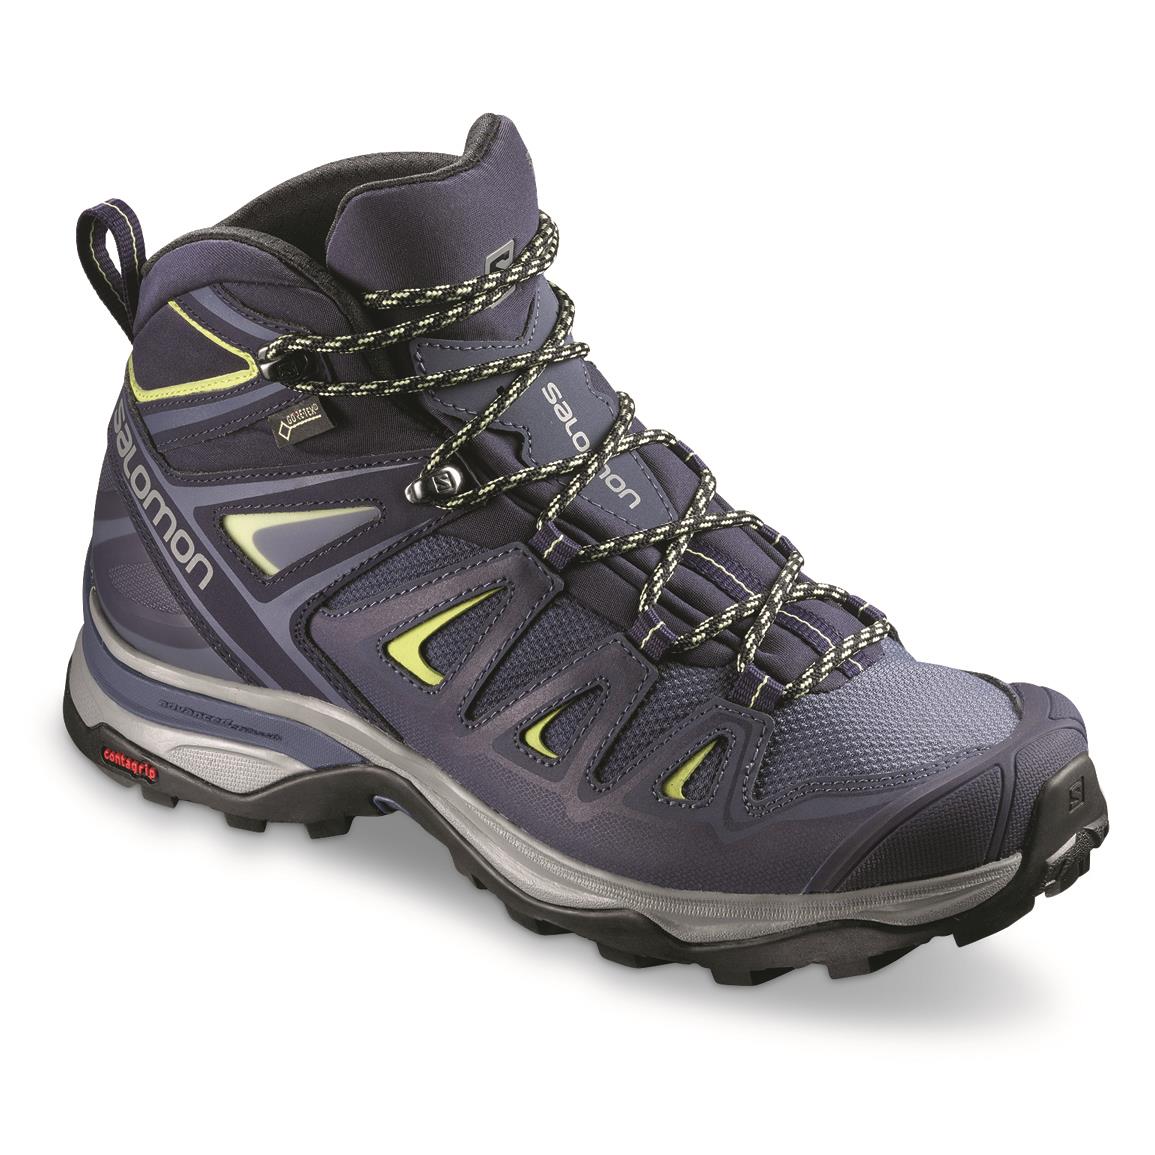 salomon men's x ultra 3 mid gtx waterproof hiking boots